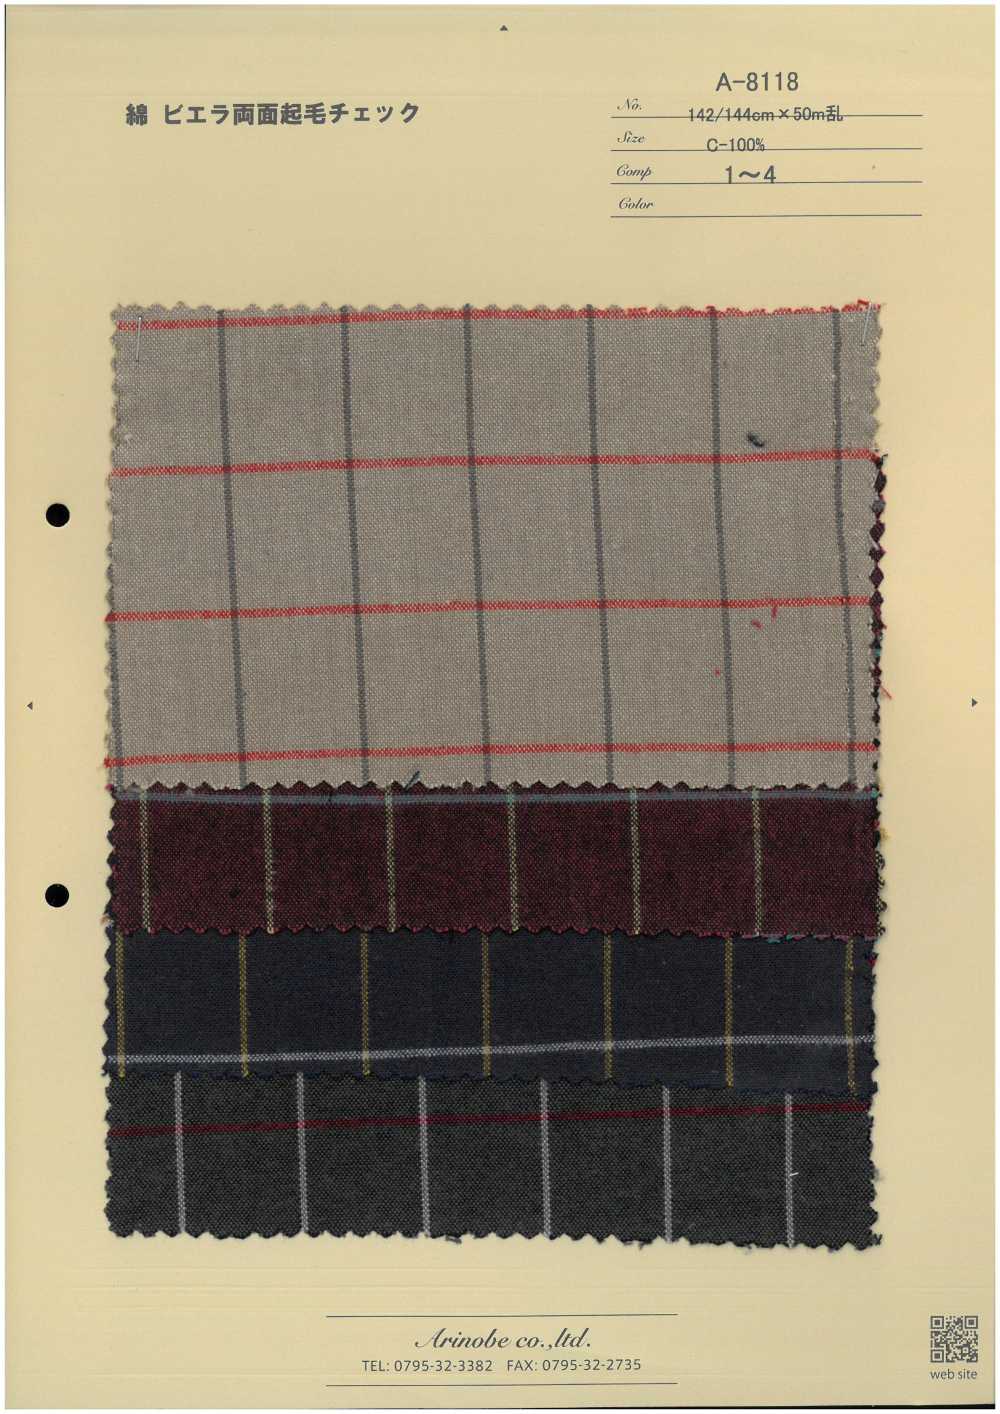 A-8118 Double-sided Fuzzy Cotton Viyella Check[Textile / Fabric] ARINOBE CO., LTD.